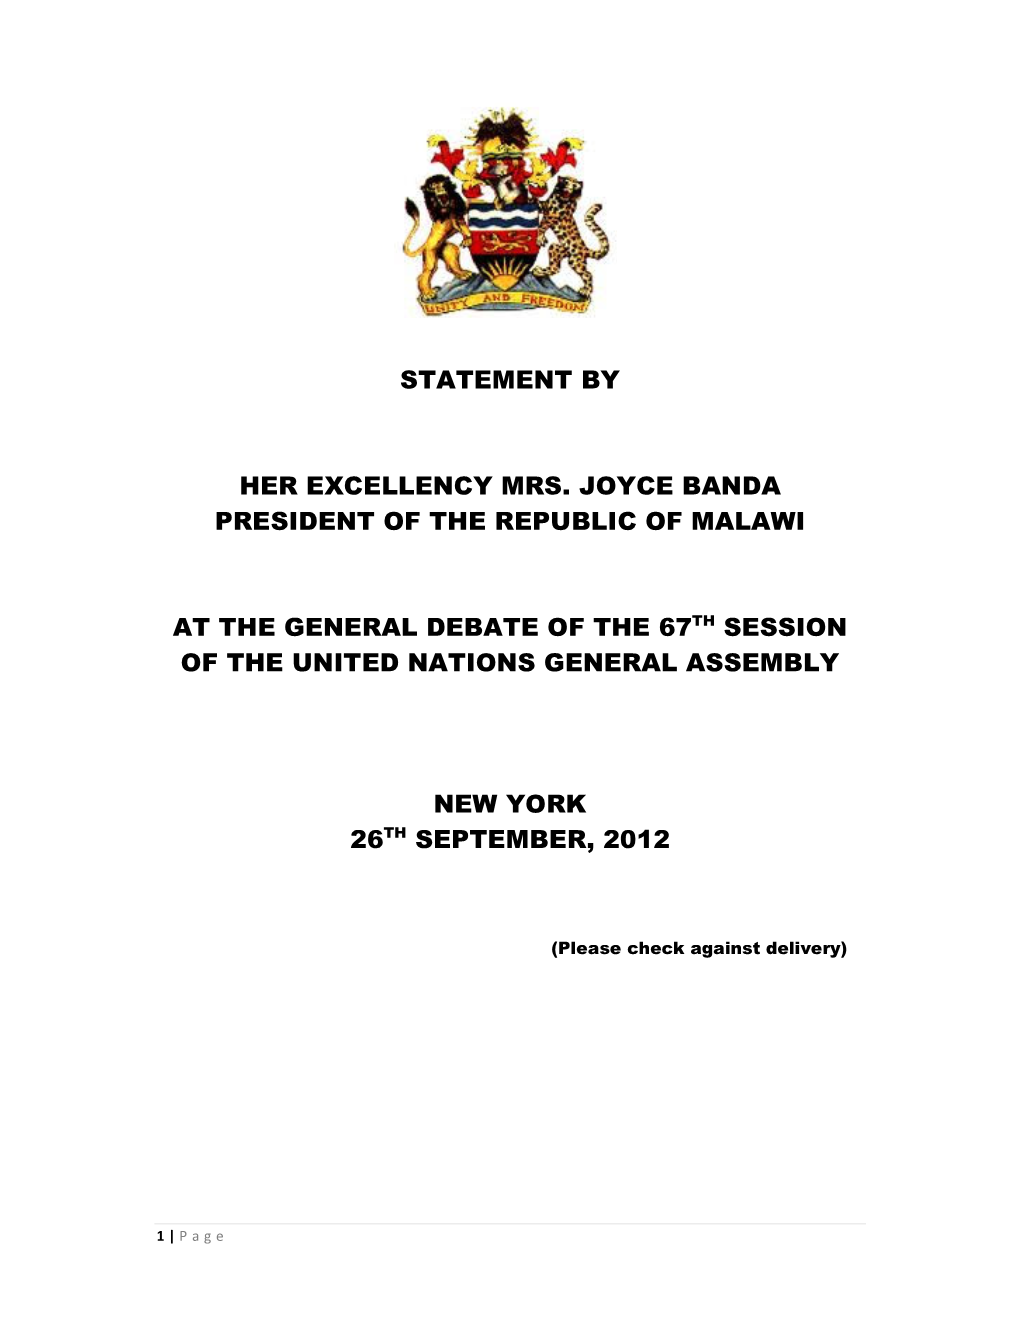 Statement by Her Excellency Mrs. Joyce Banda President